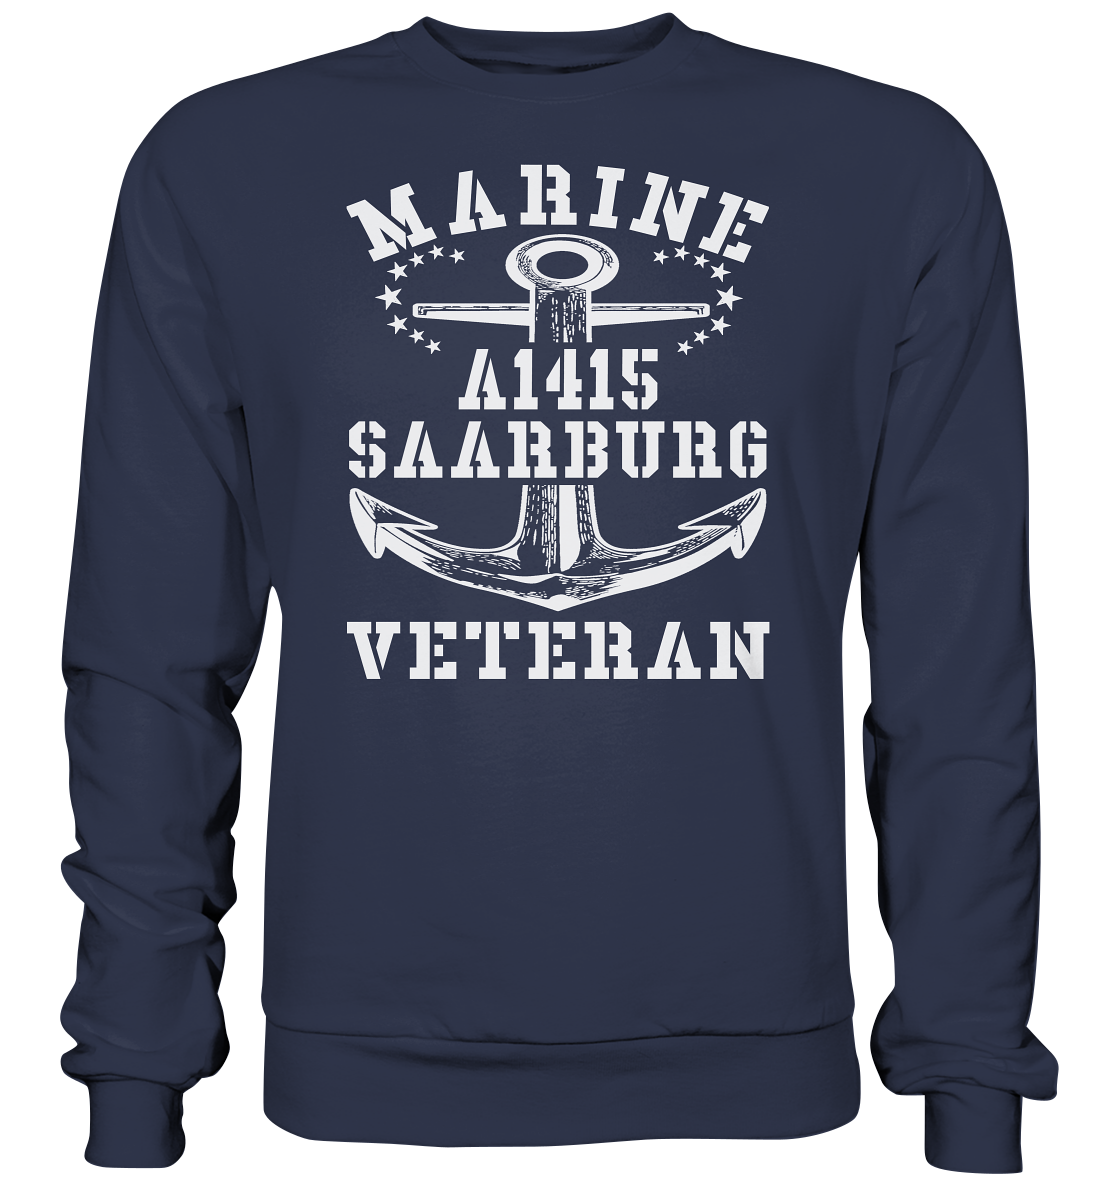 Troßschiff A1415 SAARBURG Marine Veteran - Premium Sweatshirt